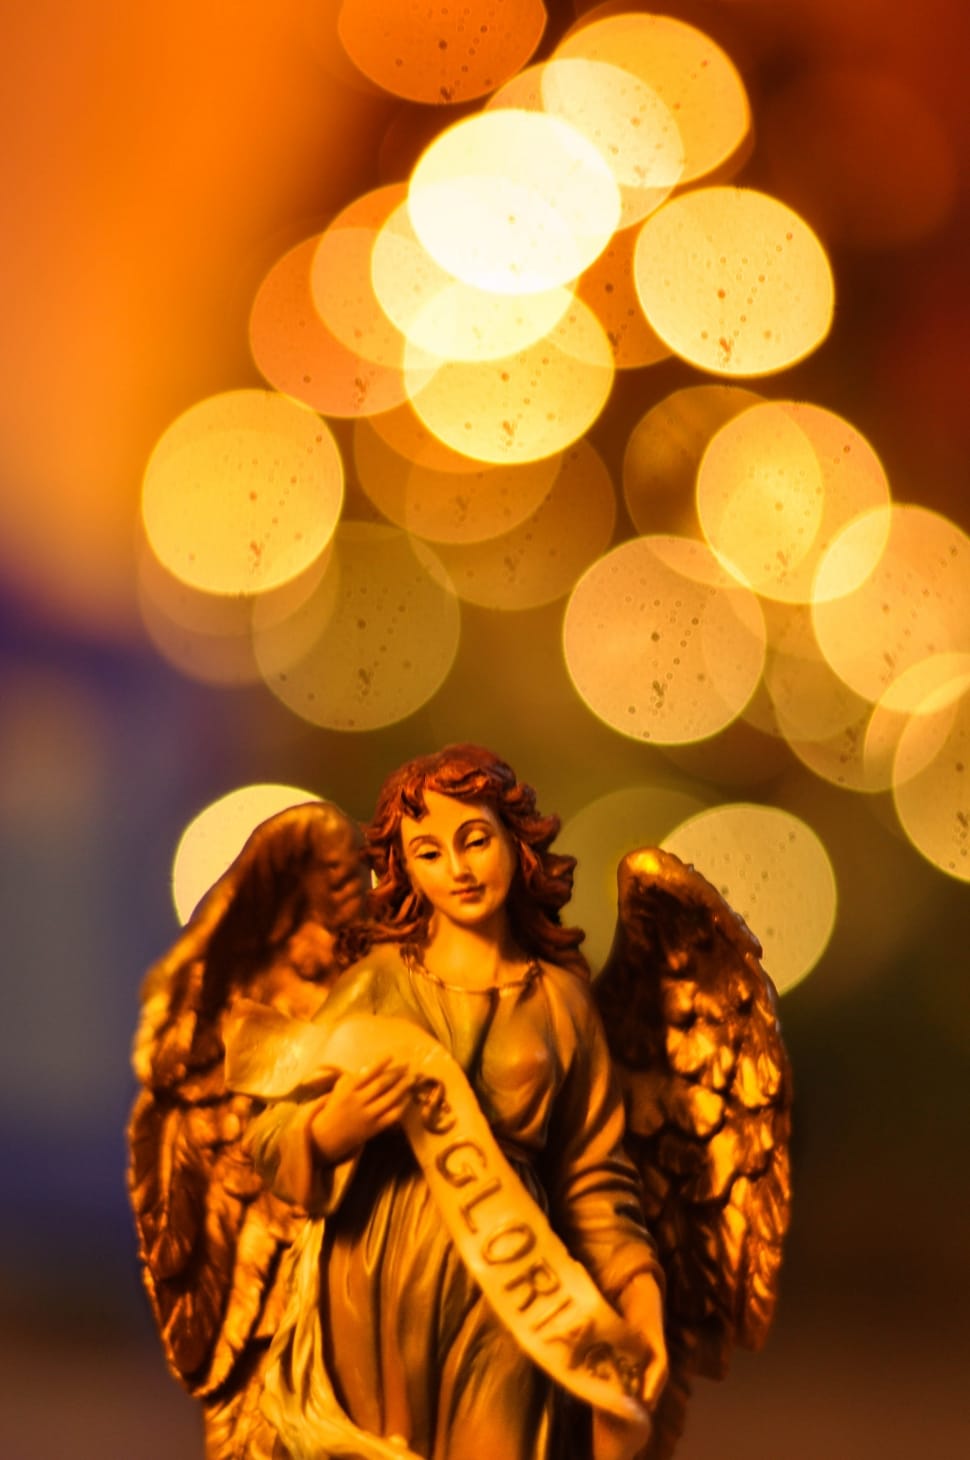 angel ceramic figurine preview